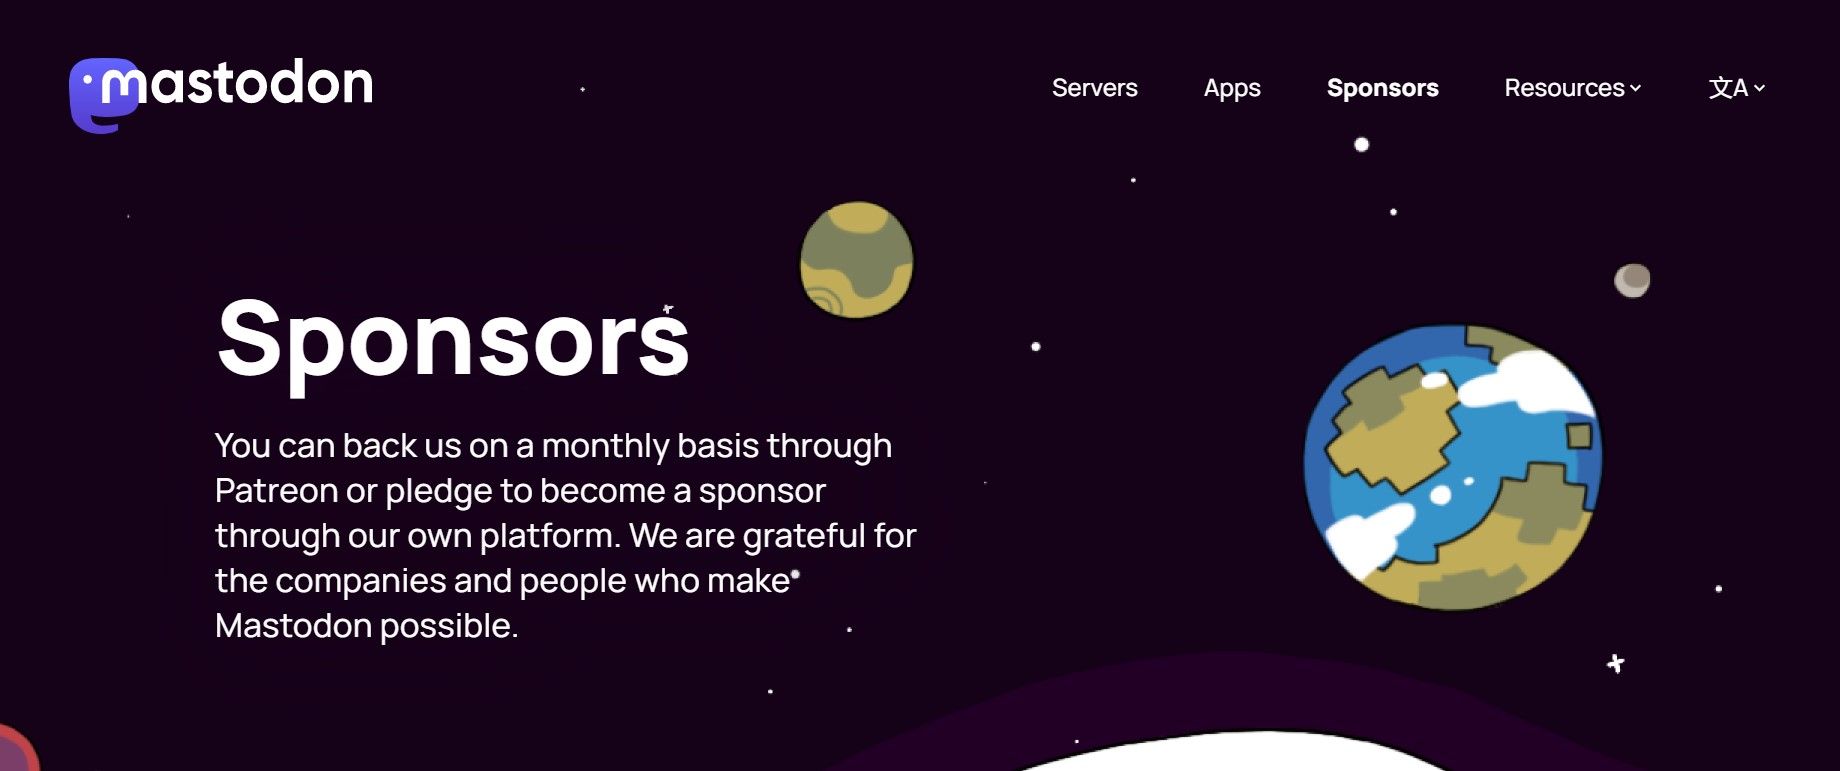 screenshot of Mastodon's sponsor page